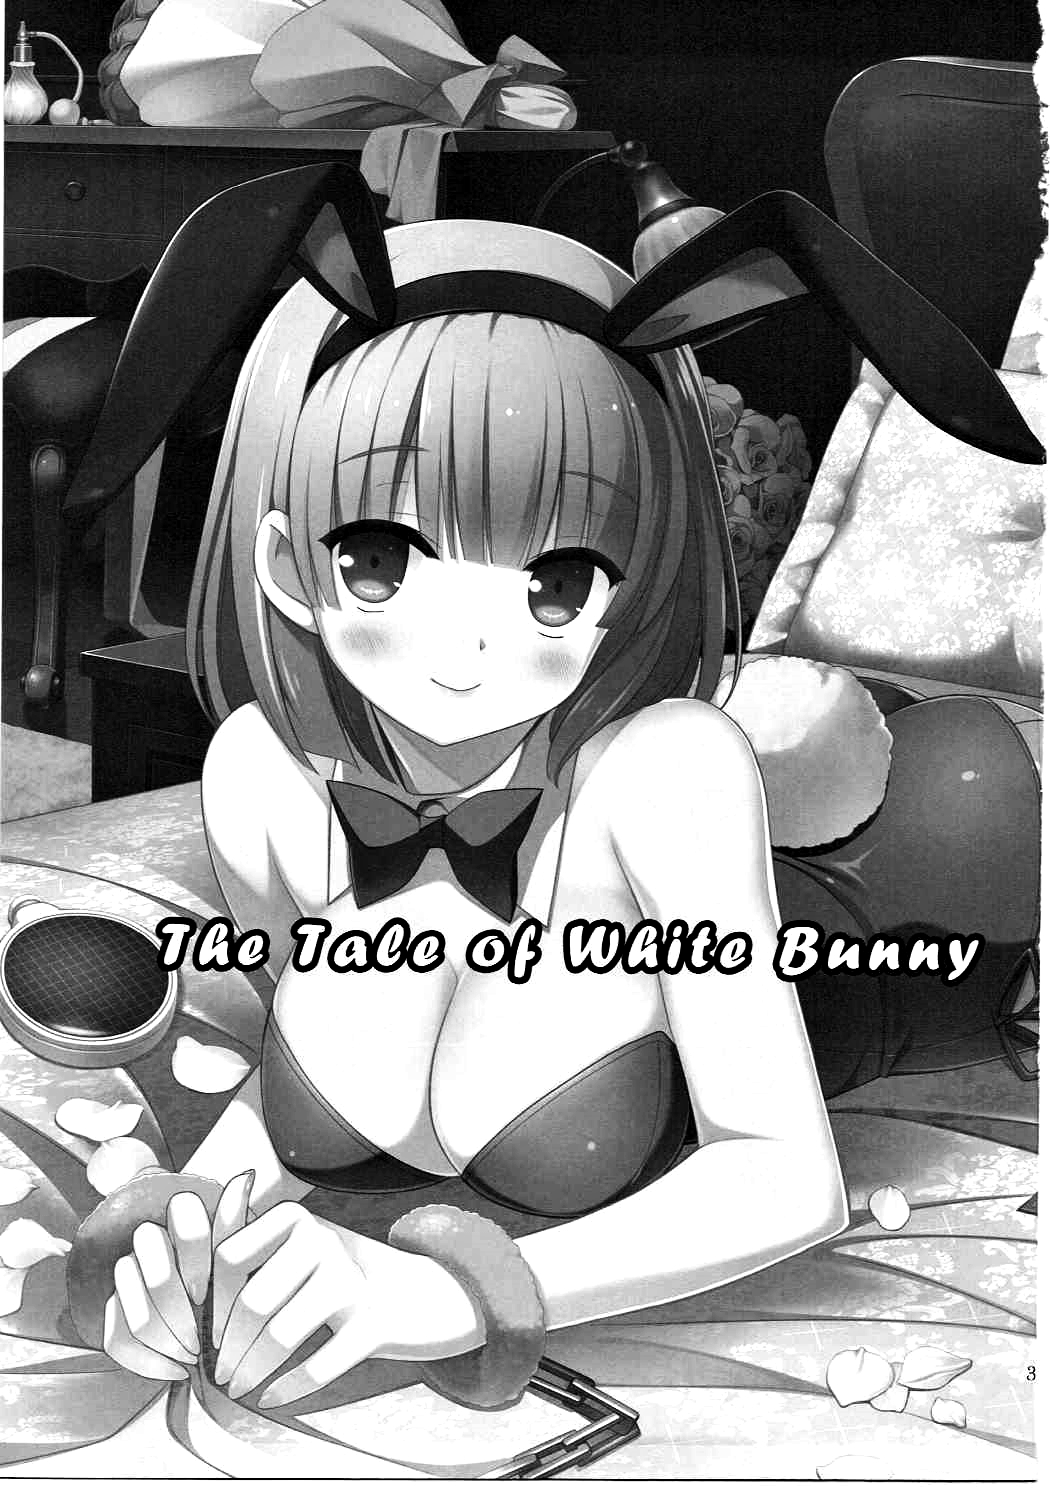 (C86) [BERRY BAGEL (兼清みわ)] The Tale of White Bunny (ドラゴンボールZ)